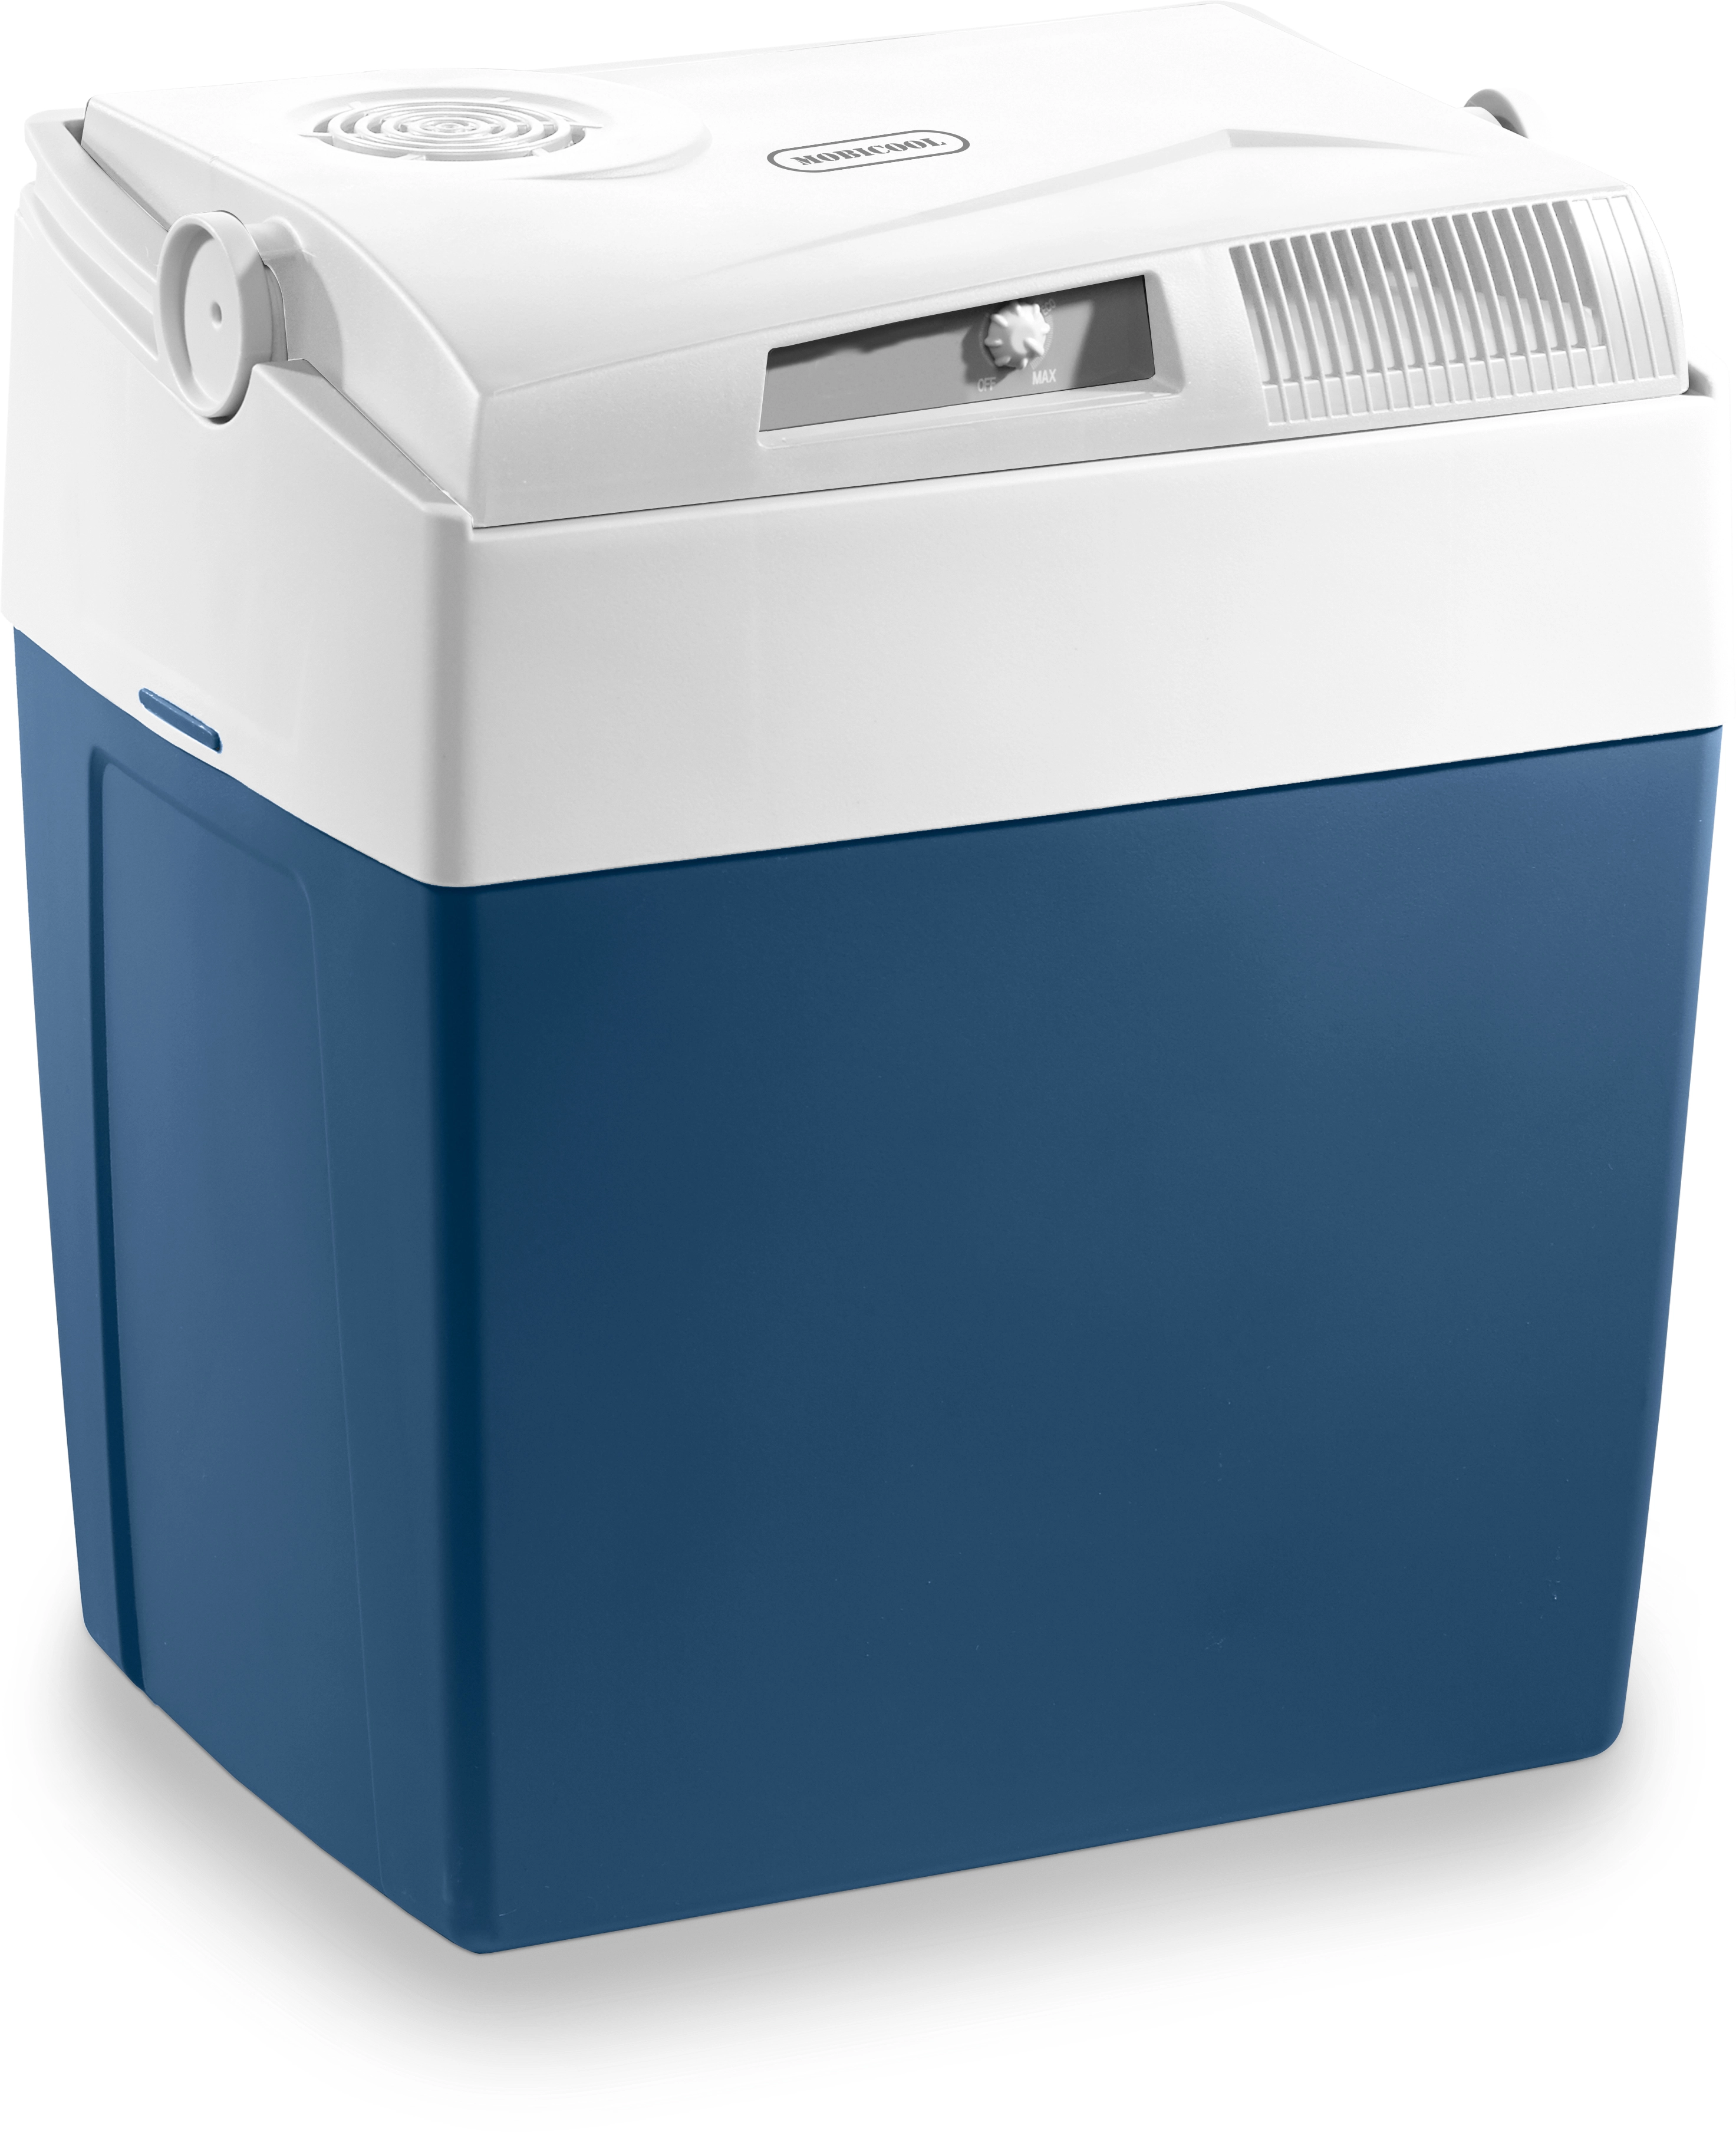 Lifetime Kühlbox Campingbox 26,5 Liter Grau kaufen bei OBI